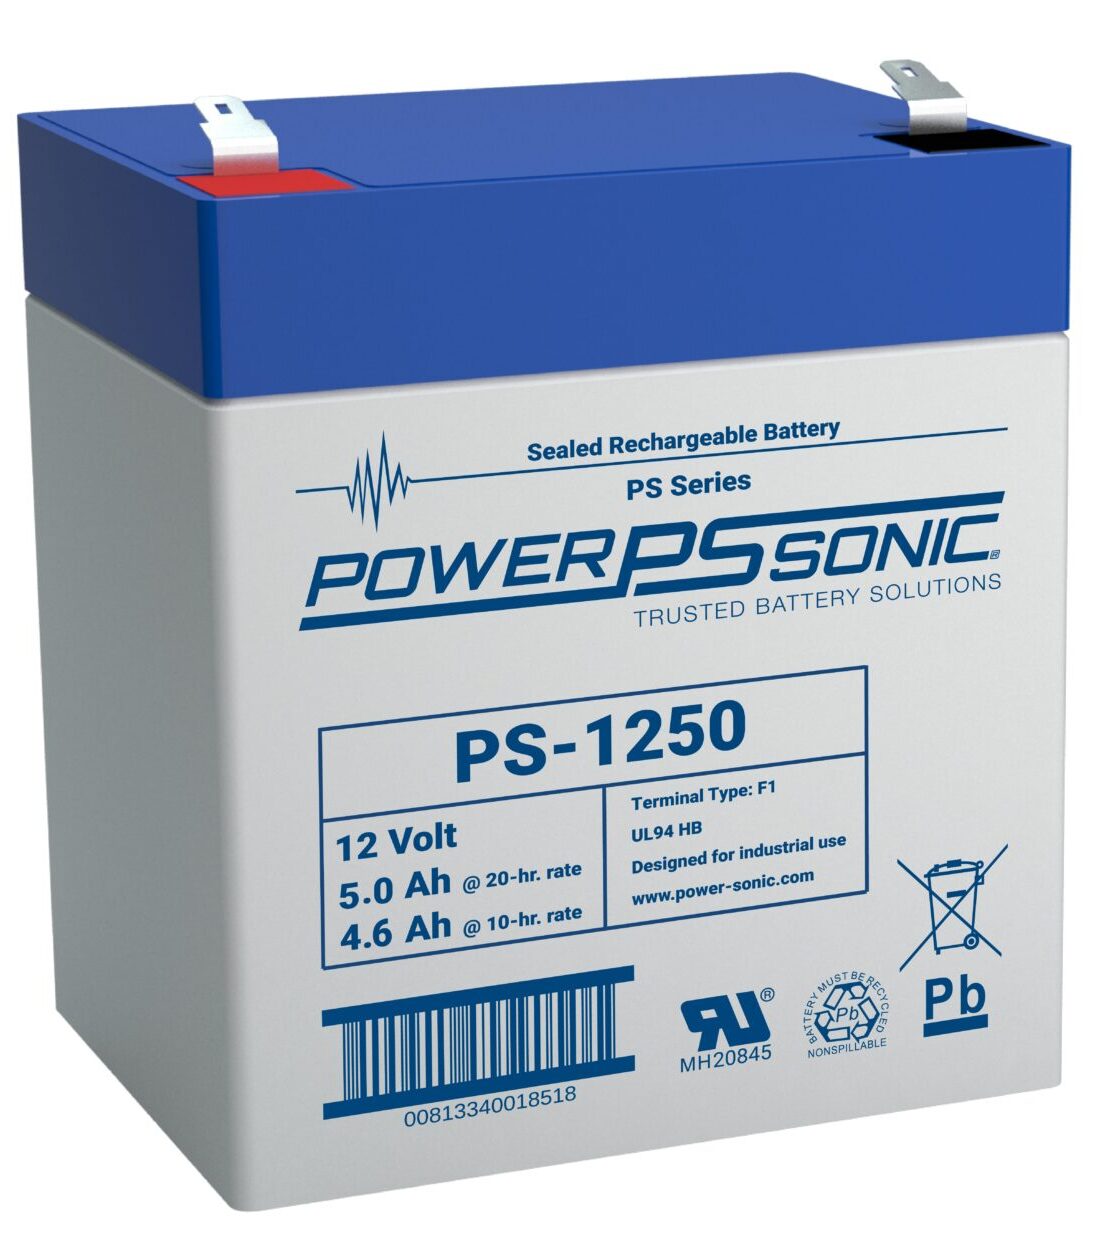 12V 4.5 AH @ 10-hr. Power-Sonic Rechargeable Sealed Lead Acid Battery PS-1250 12V 5.0AH @ 20-hr 